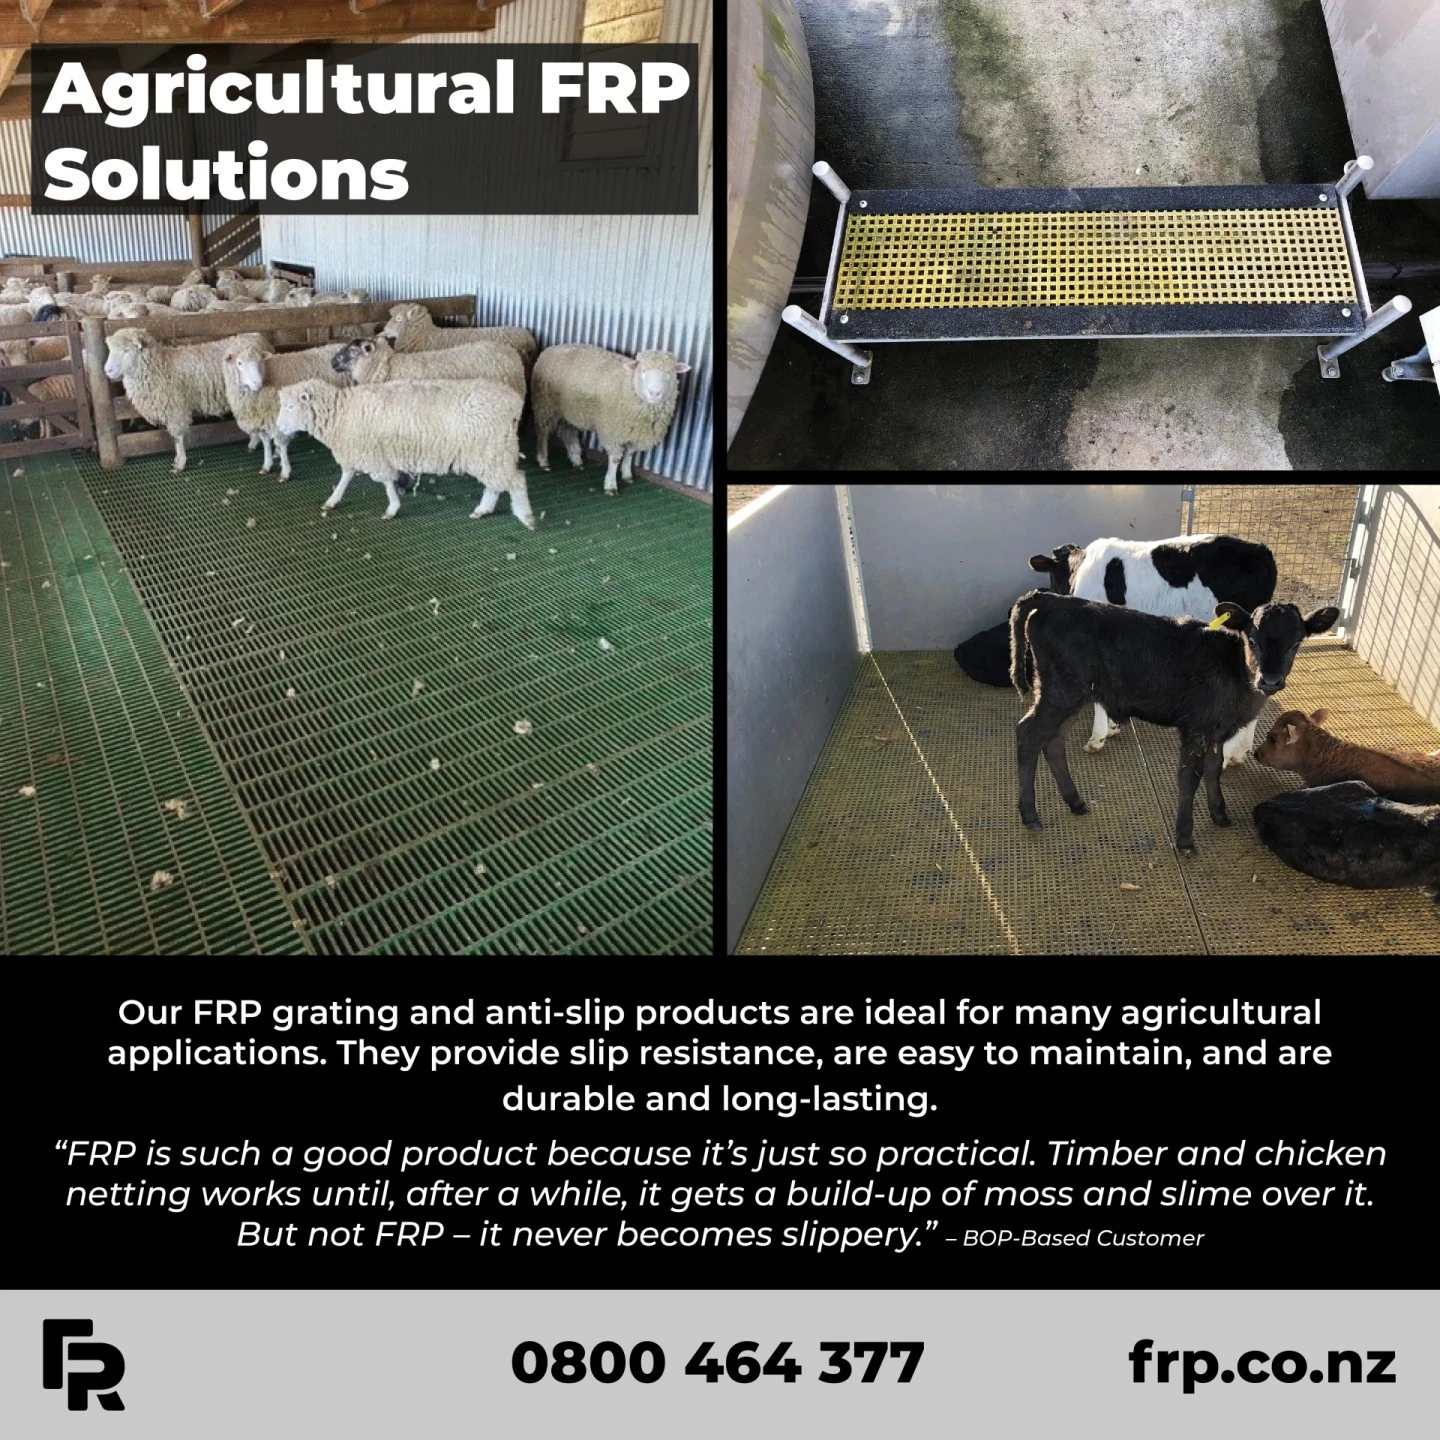 Providing solutions for farmers.

#frp #frpproducts #agriculture #farming #dairyfarming #calves #lambs #livestock #nzfarms #nzdairy